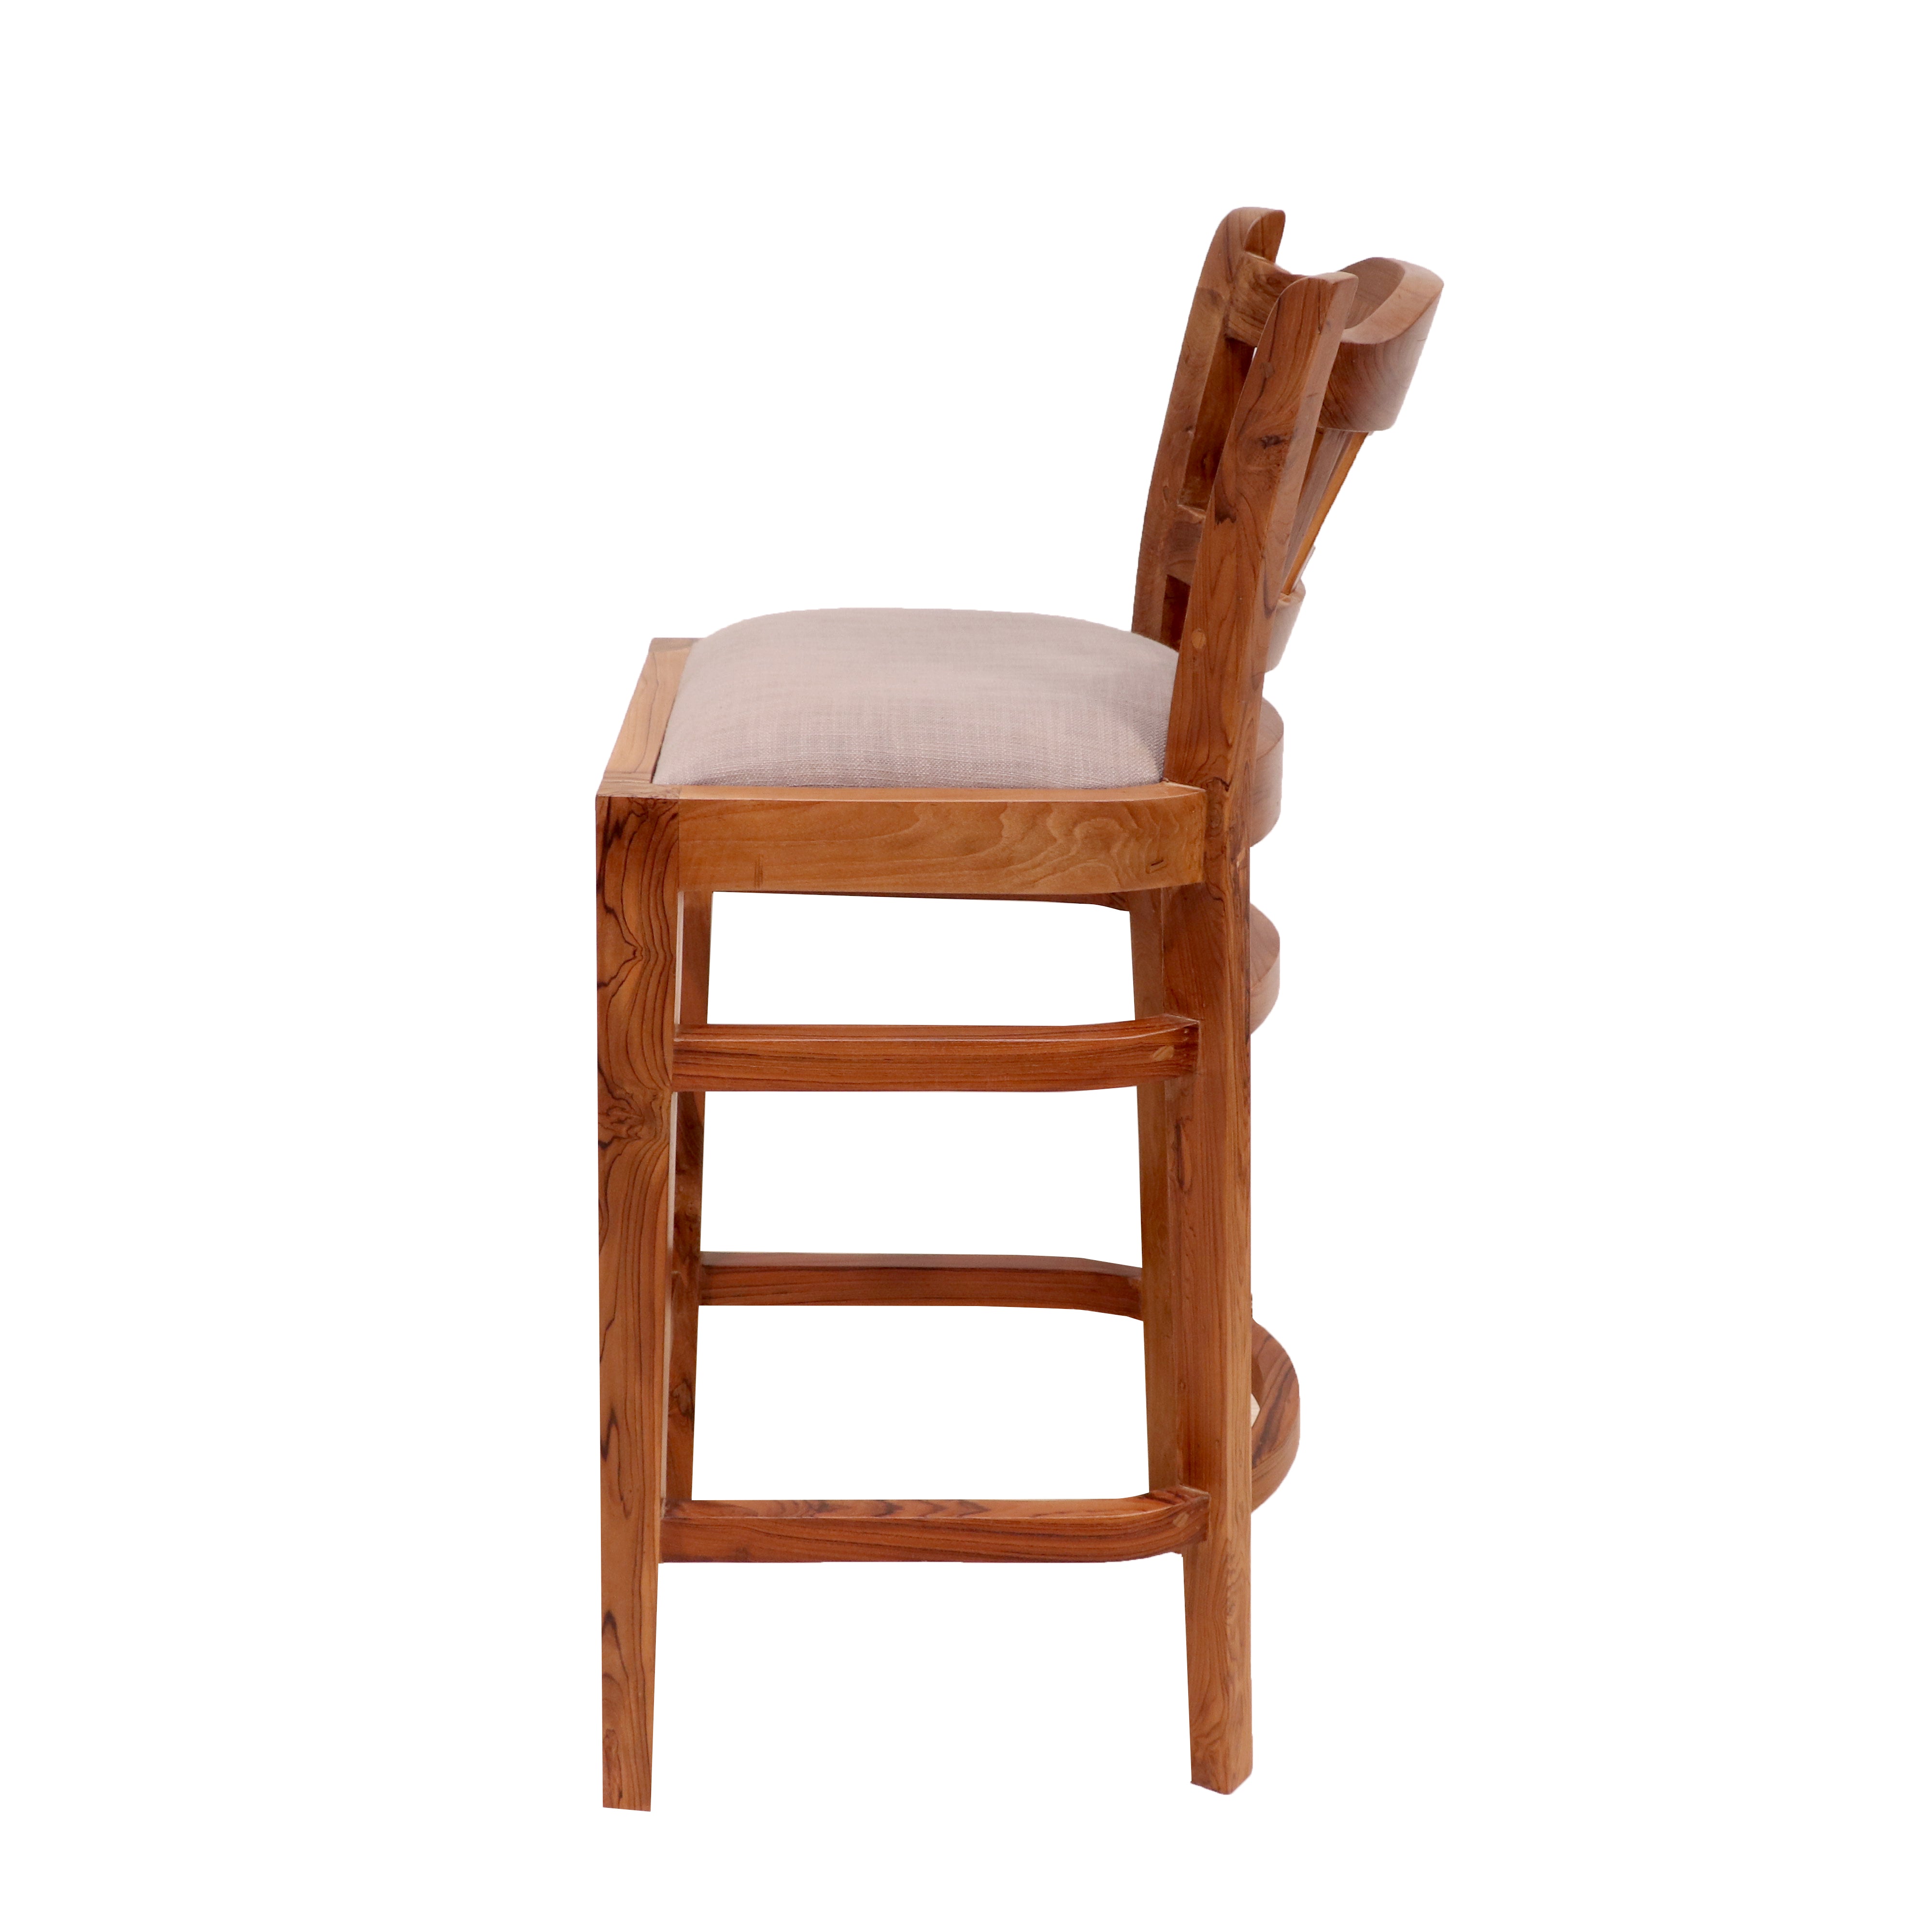 Teak wood bar height chair with curvy design Bar Chair